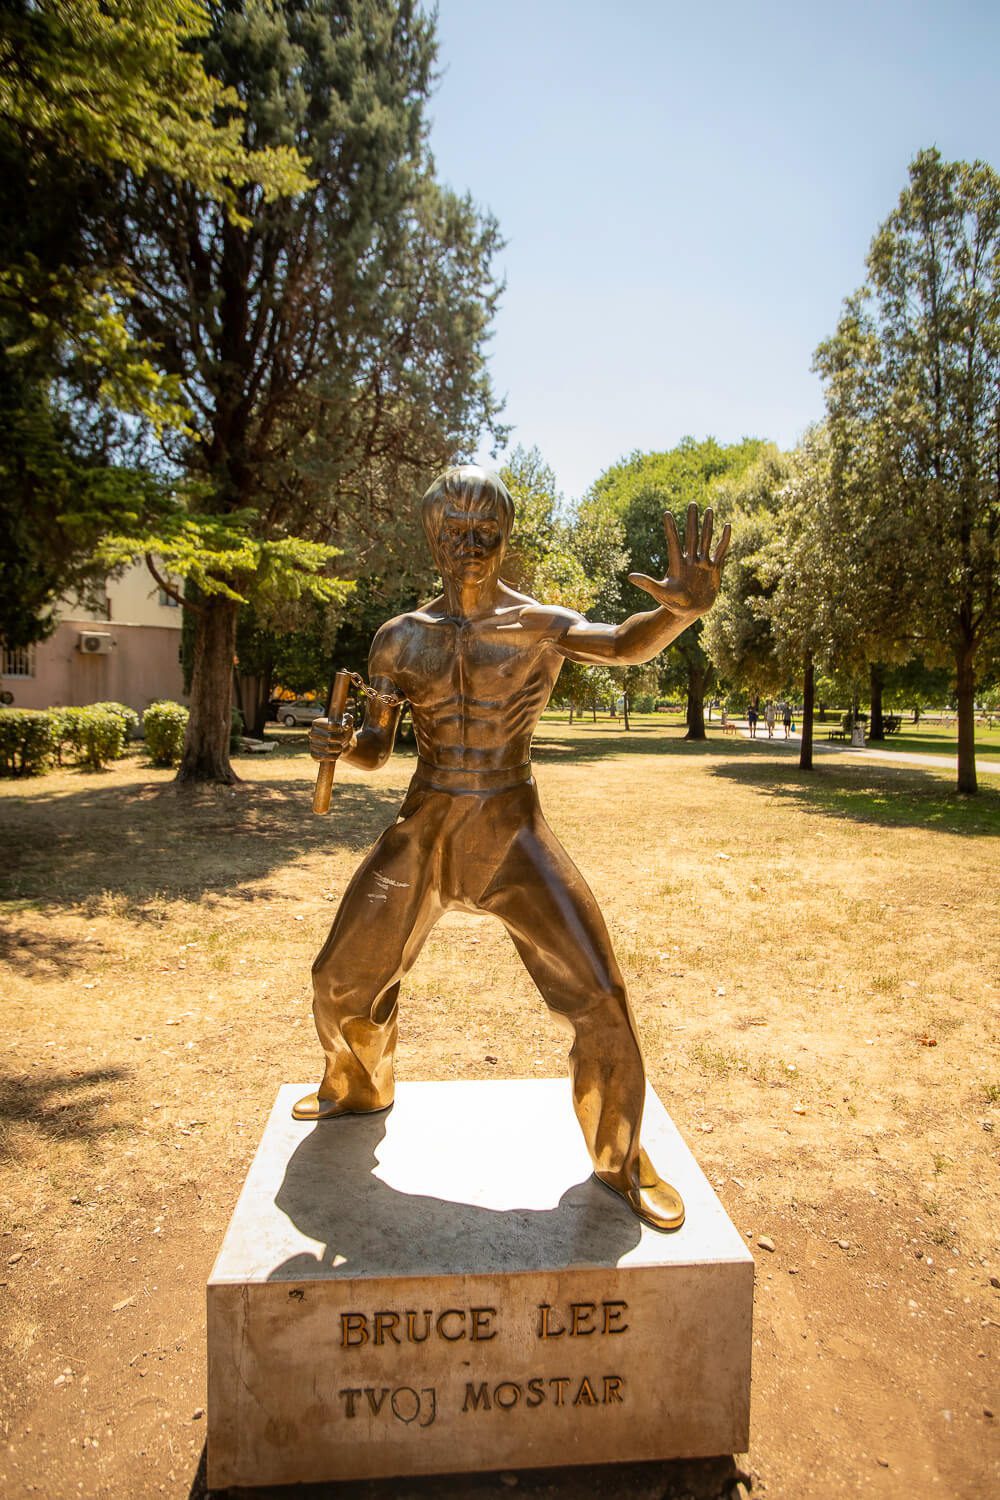 Bruce Lee Statue in Mostar